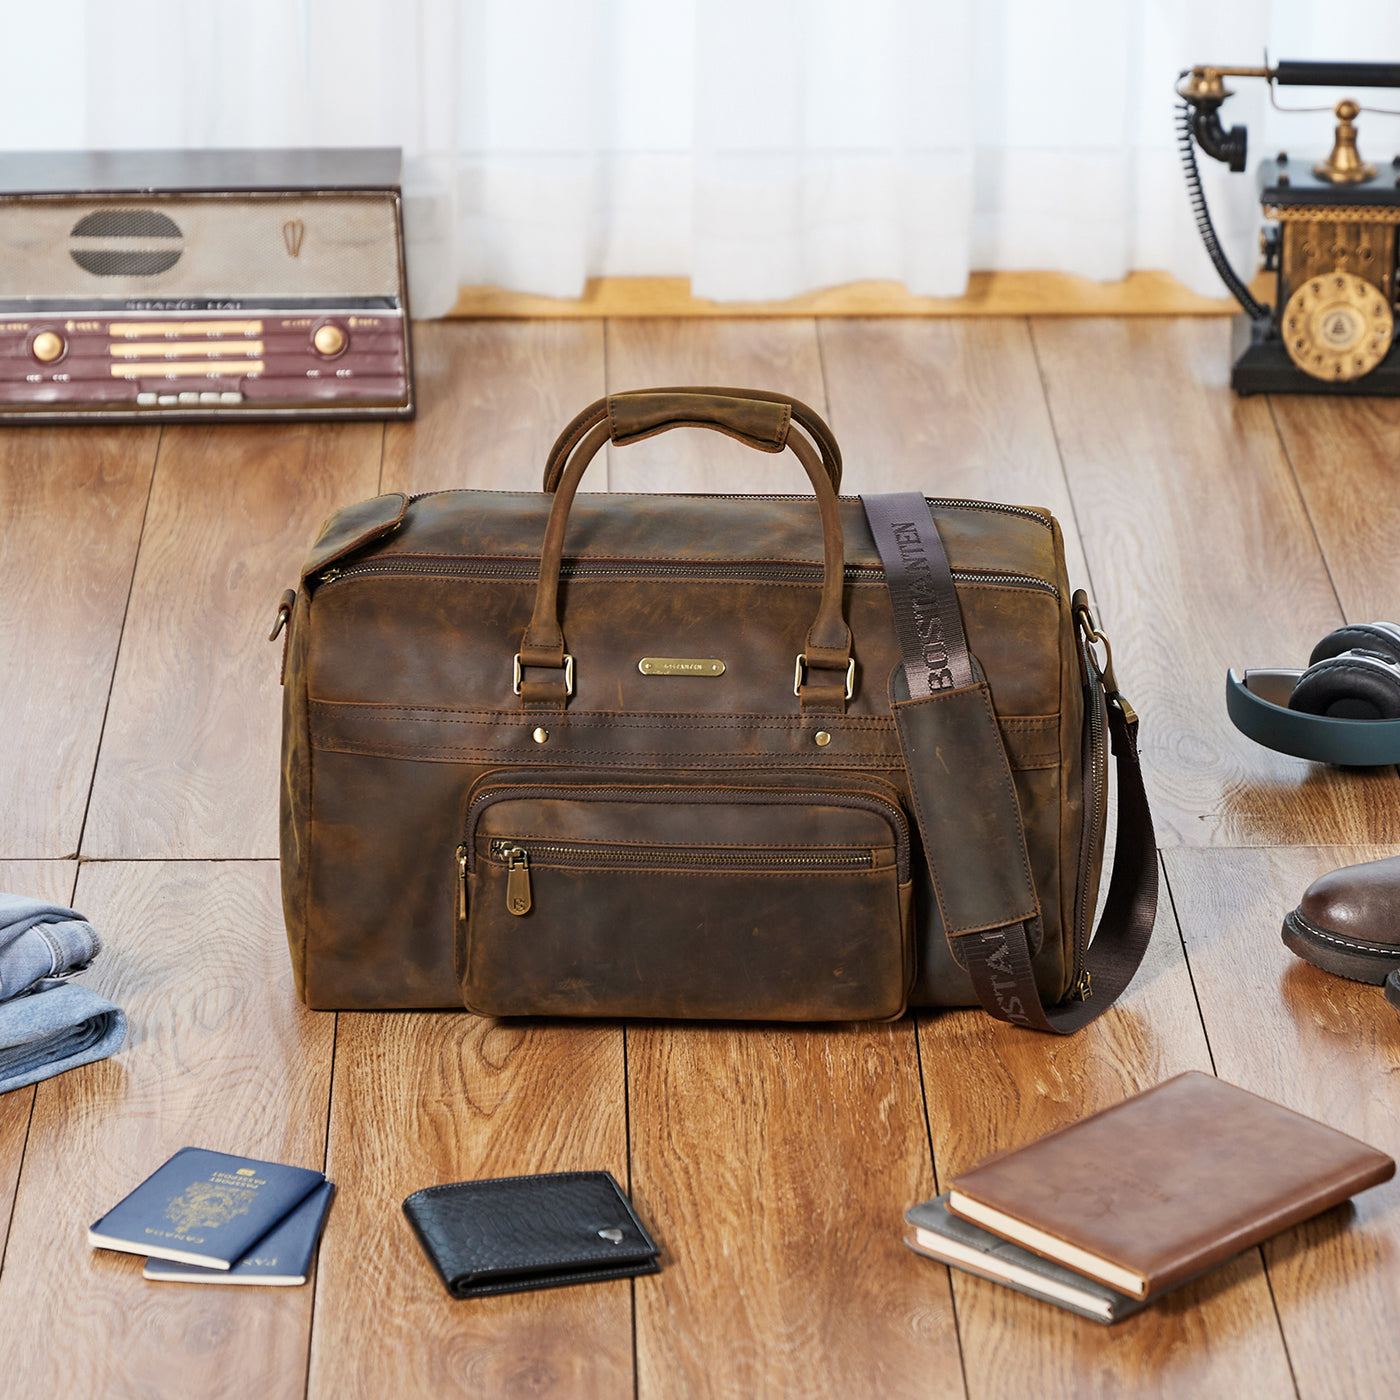 Vixen Men's Duffle Bag Luggage for Effortless Style